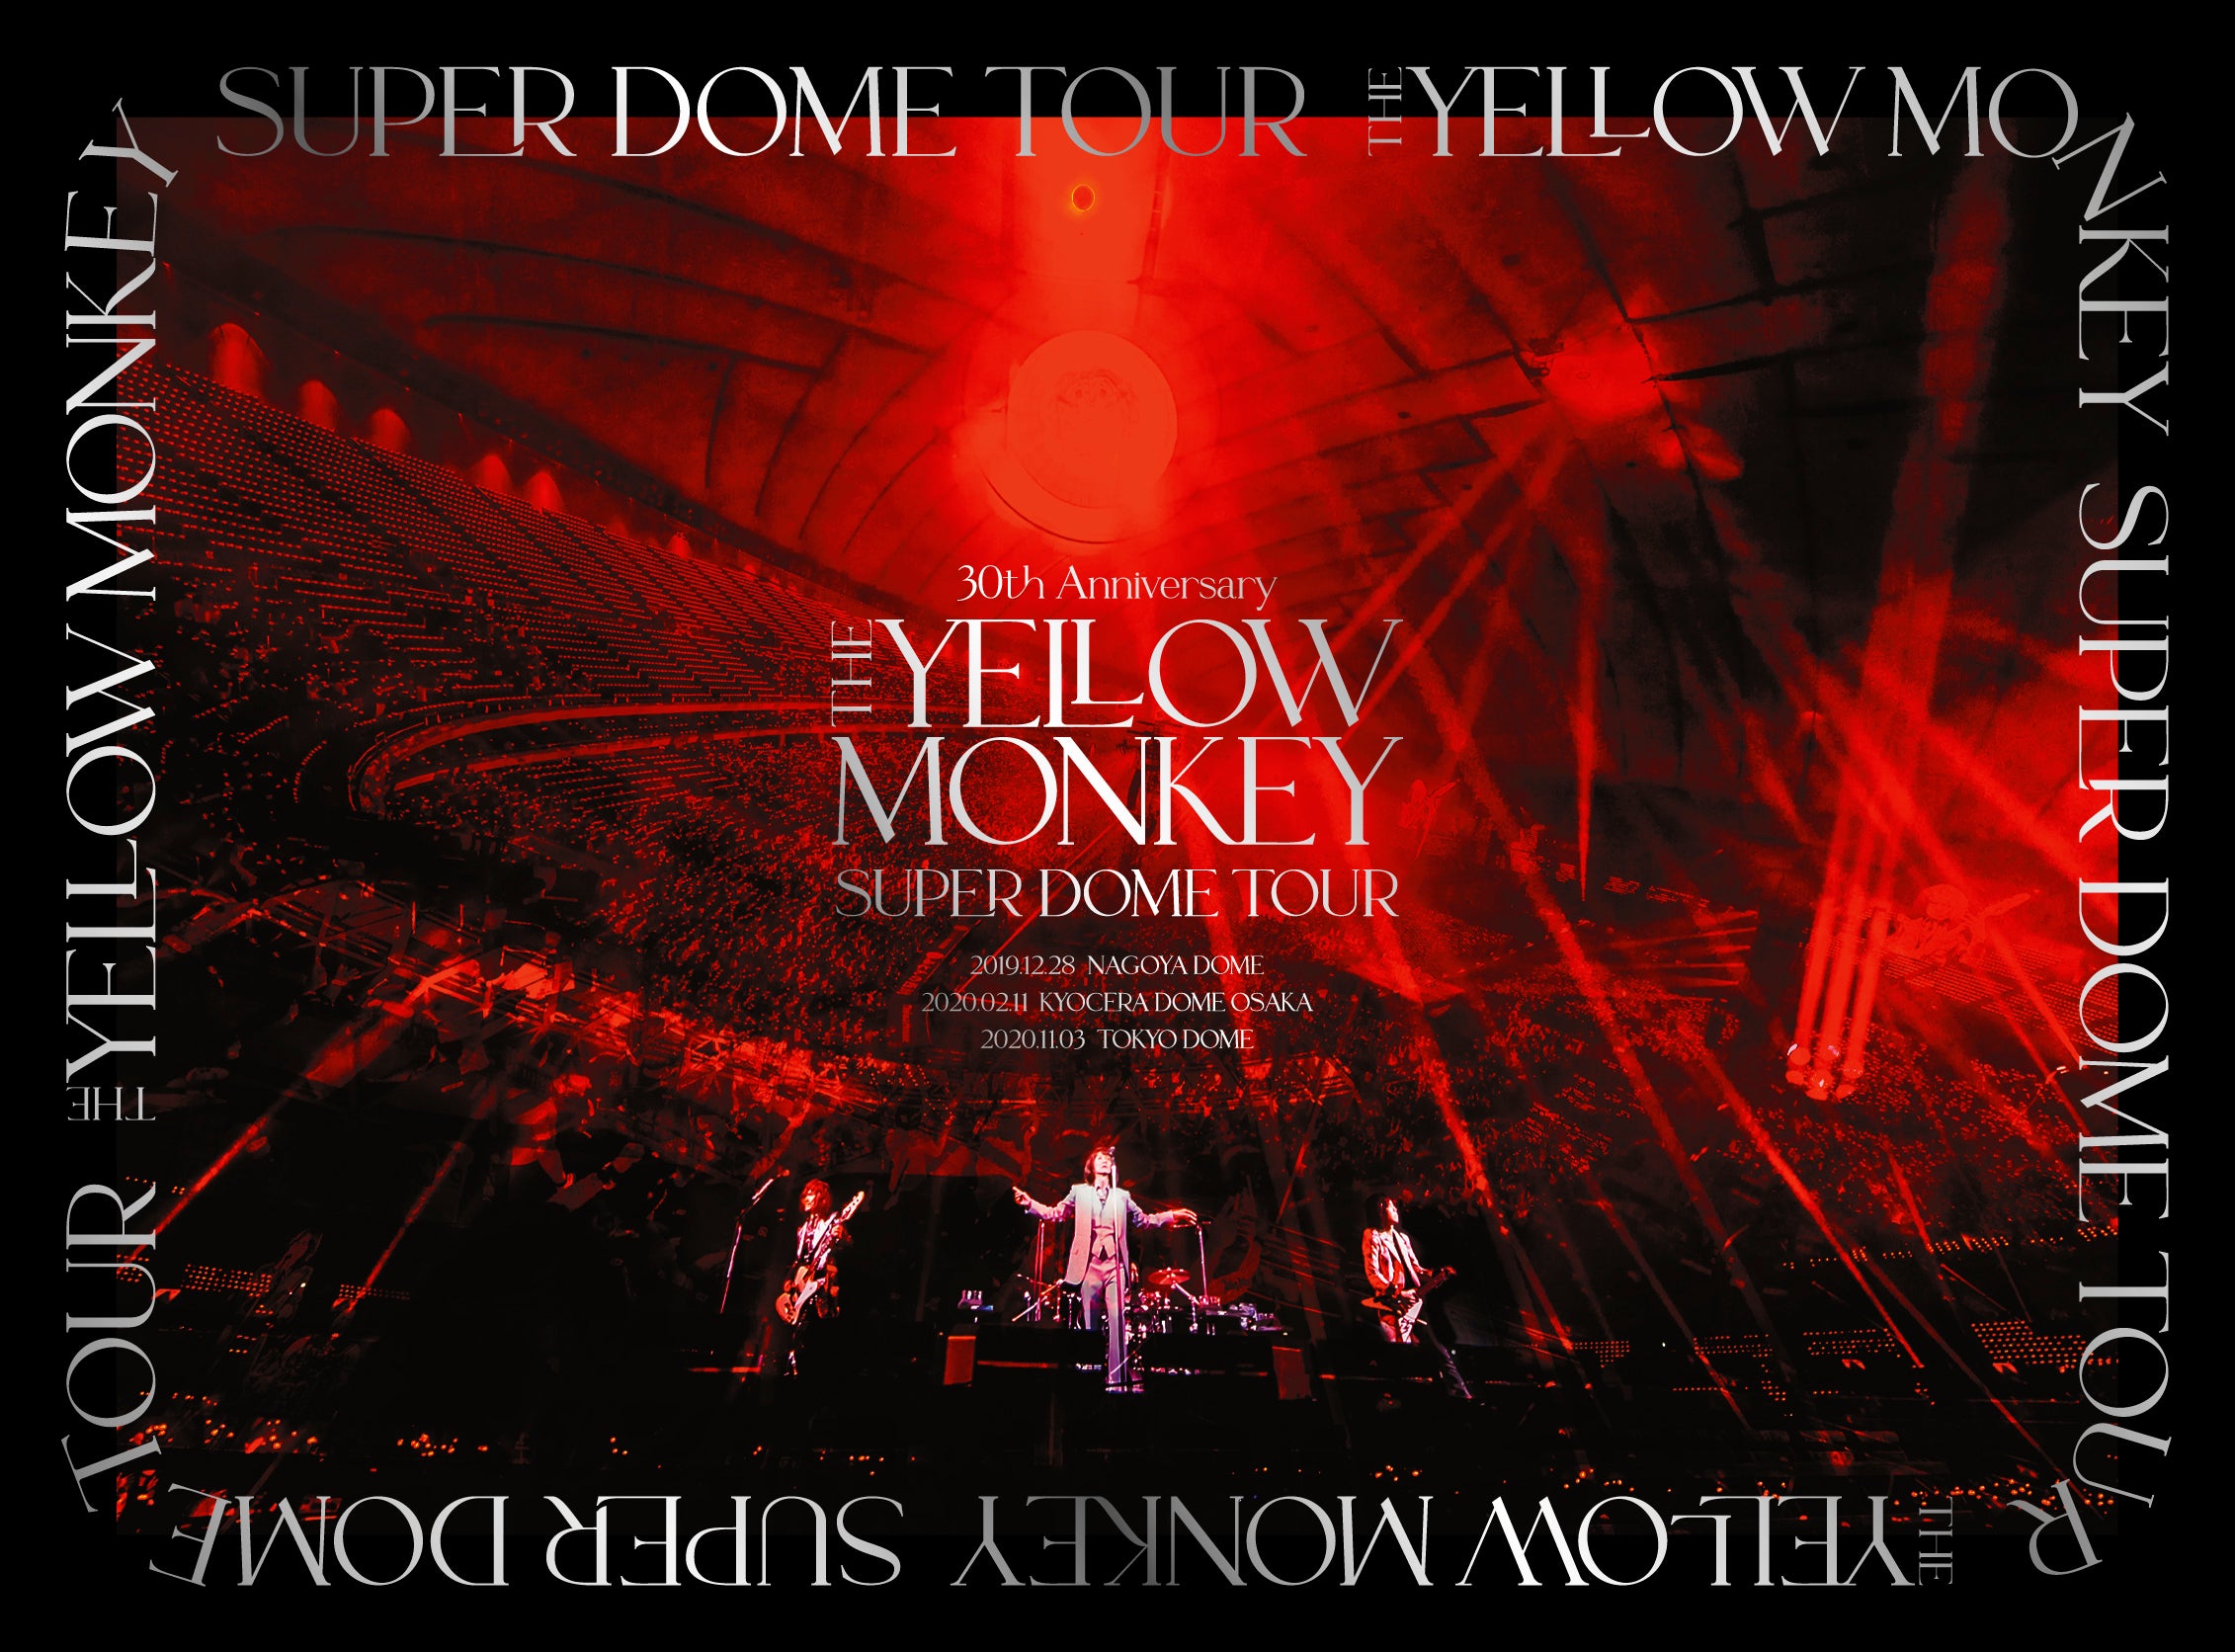 THE YELLOW MONKEY 【DVD BOX】 2セット - ミュージック